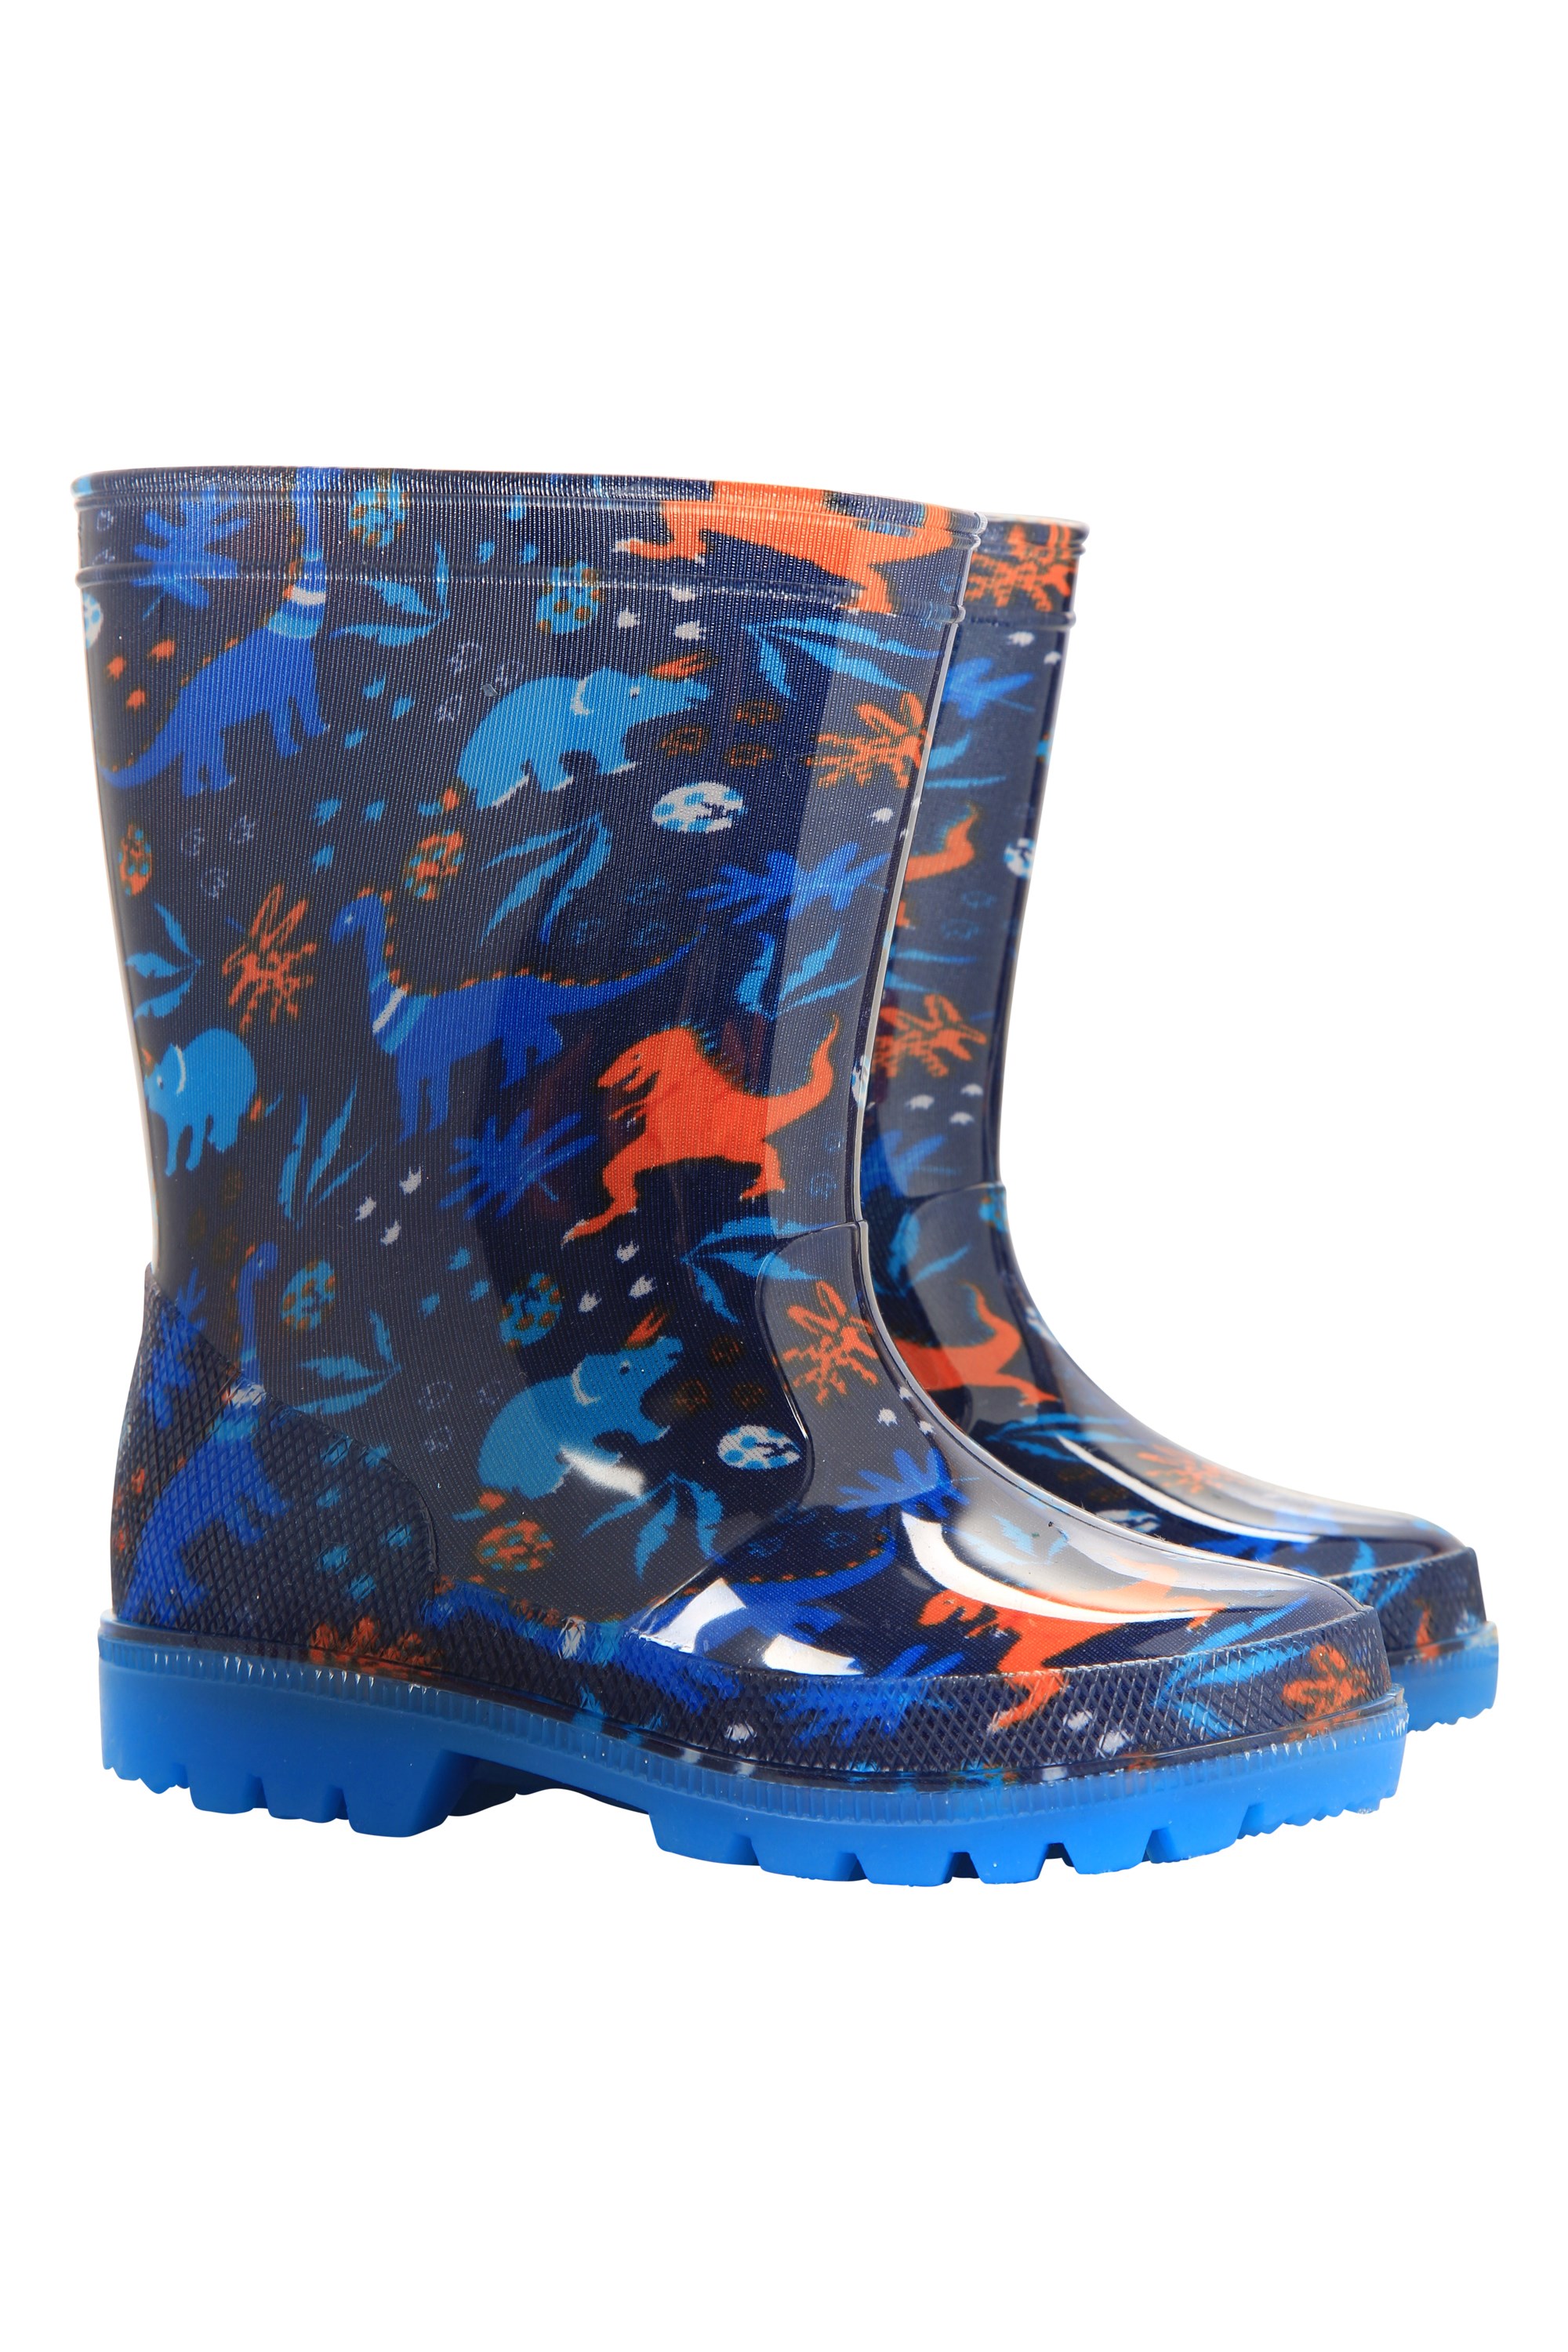 Mountain Warehouse Splash Junior Flashing Lights Rain Boots Blue